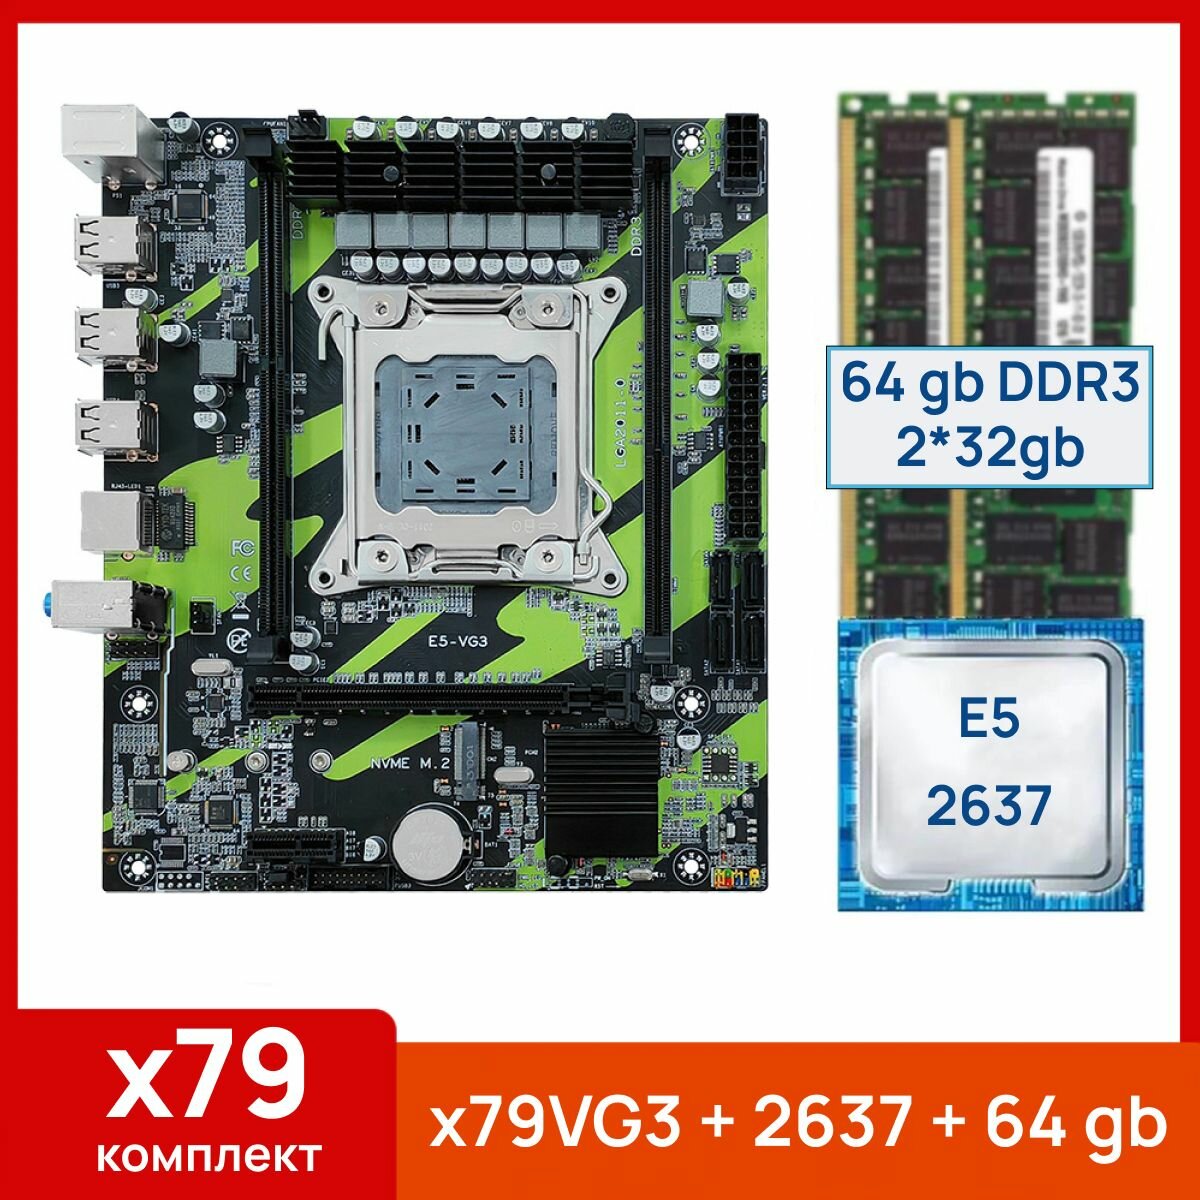 Комплект: Atermiter X79VG3 + Xeon E5 2637 + 64 gb(2x32gb) DDR3 ecc reg